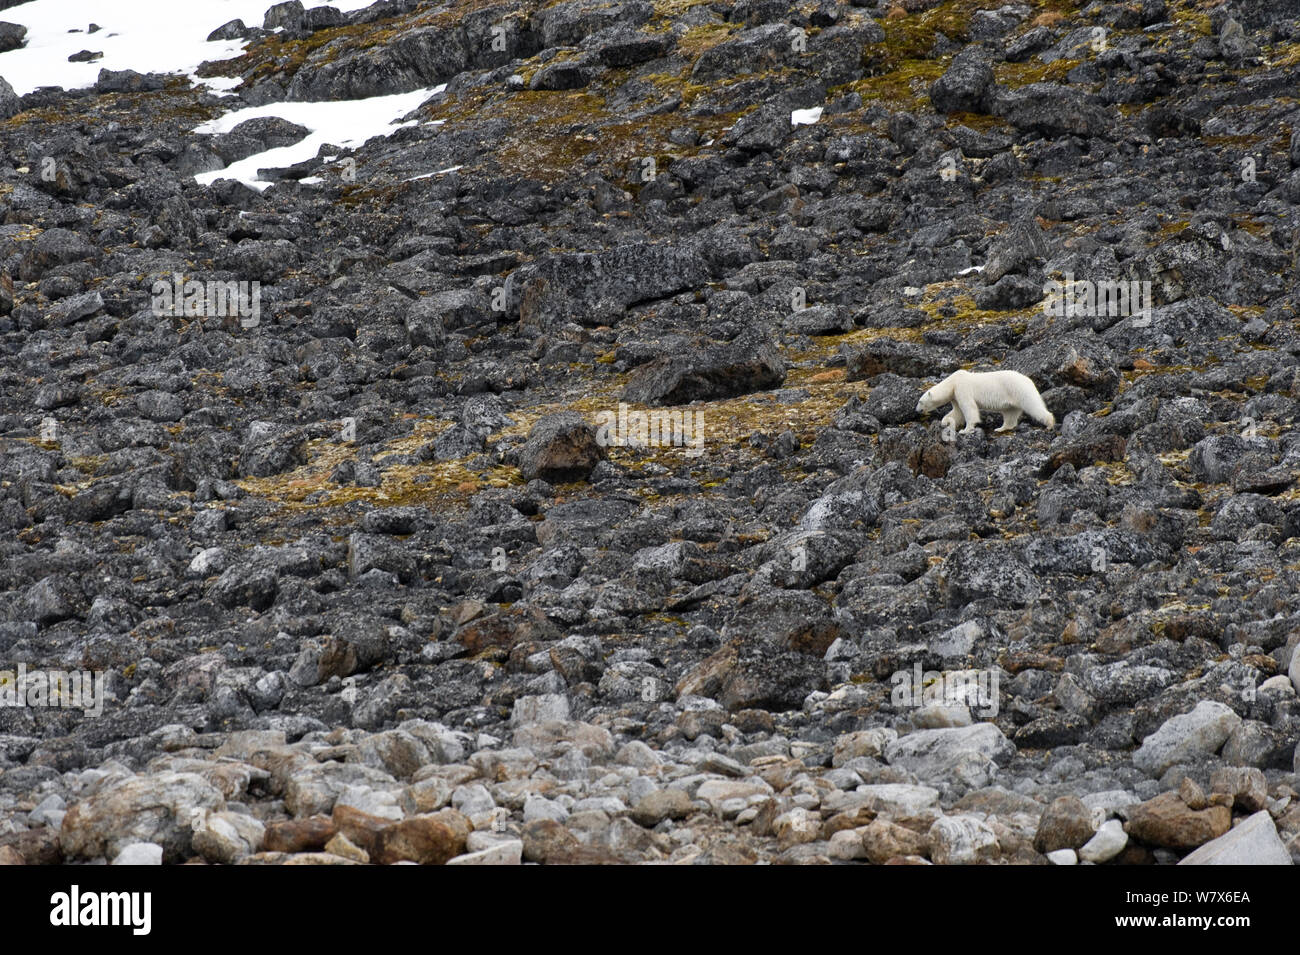 Polar Bear (Ursus maritimus) foraging along a rocky shoreline, Svalbard, Norway.  July 2011. Stock Photo